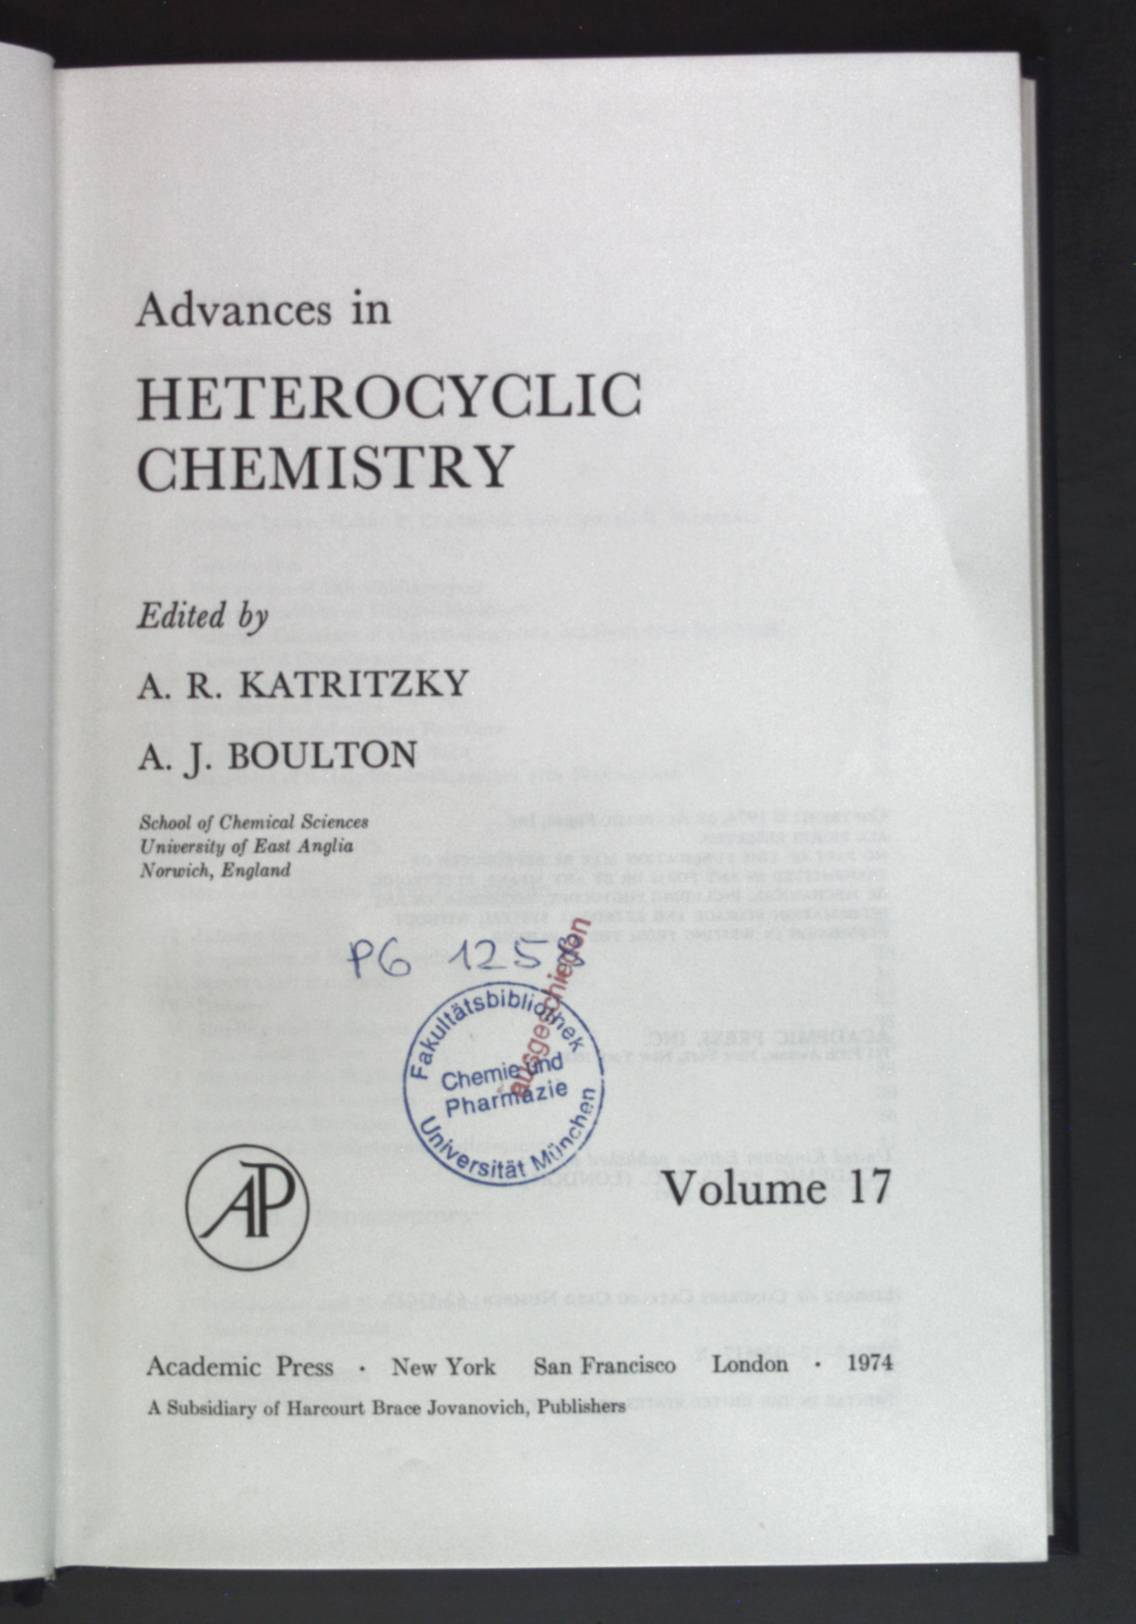 Advances in Heterocyclic Chemistry. Editorial Advisory Board: Volume 17 - Katritzky, A. R. and A.J. Boulton